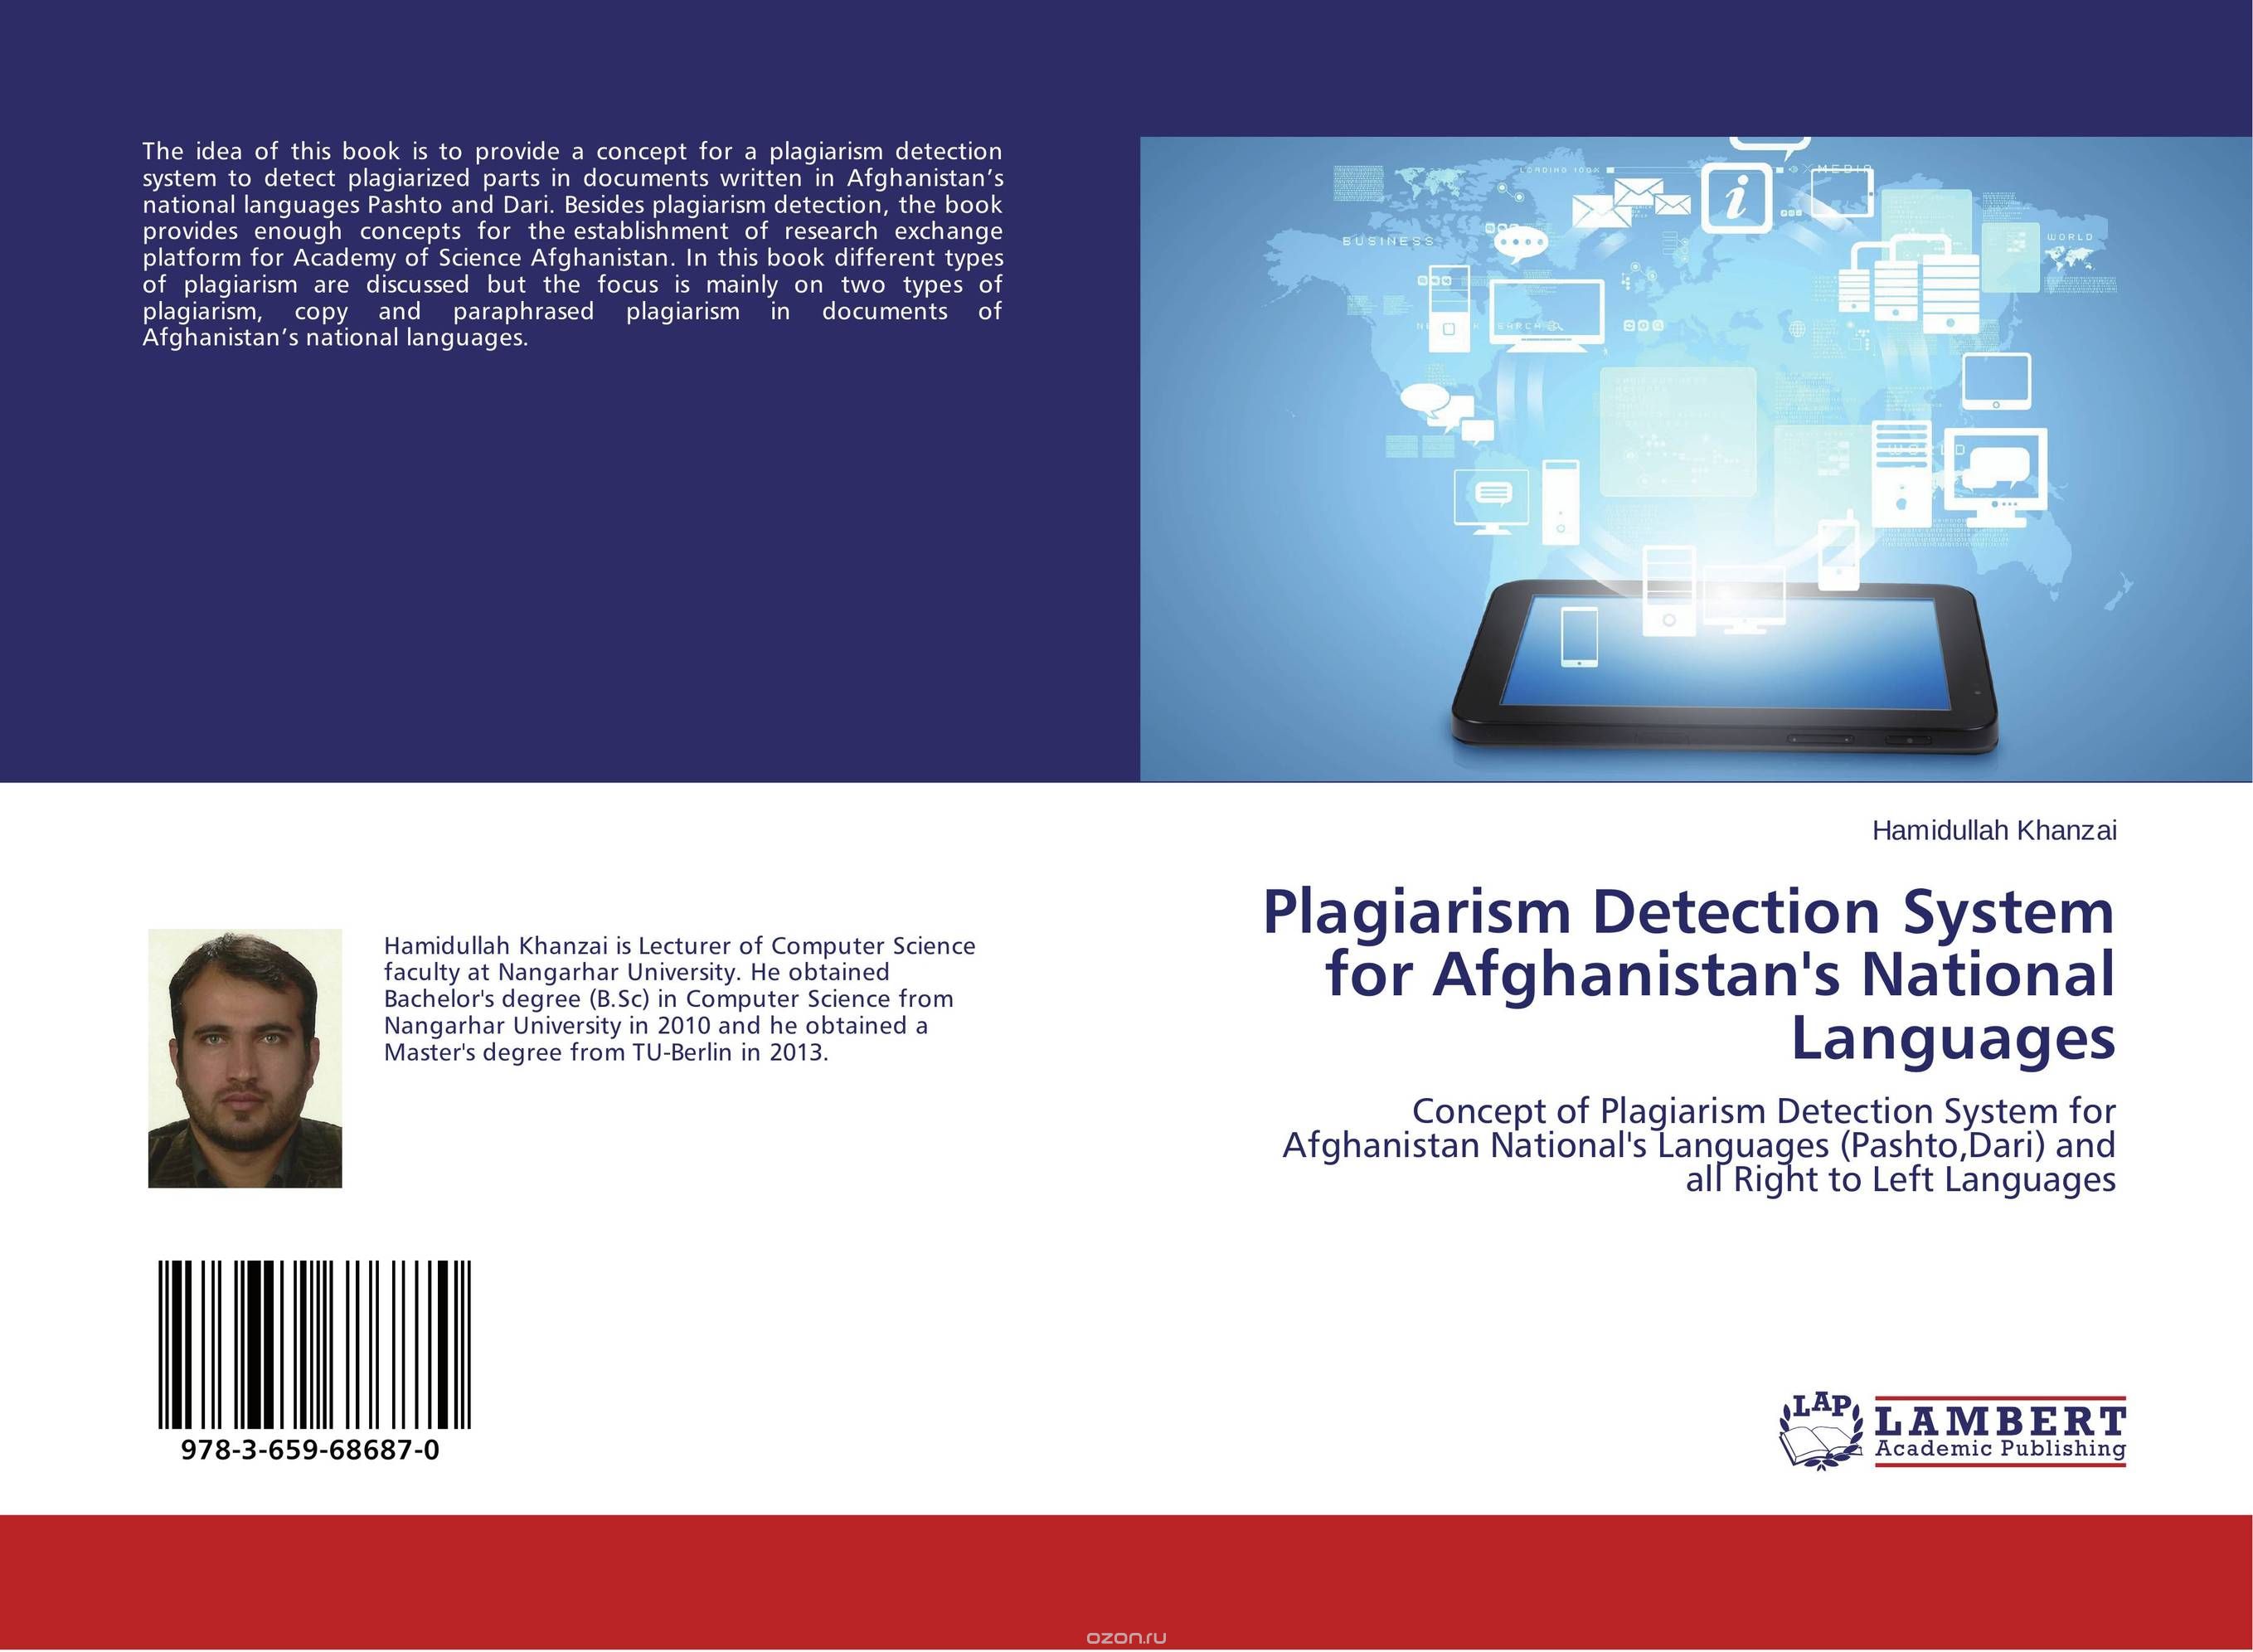 Скачать книгу "Plagiarism Detection System for Afghanistan's National Languages"